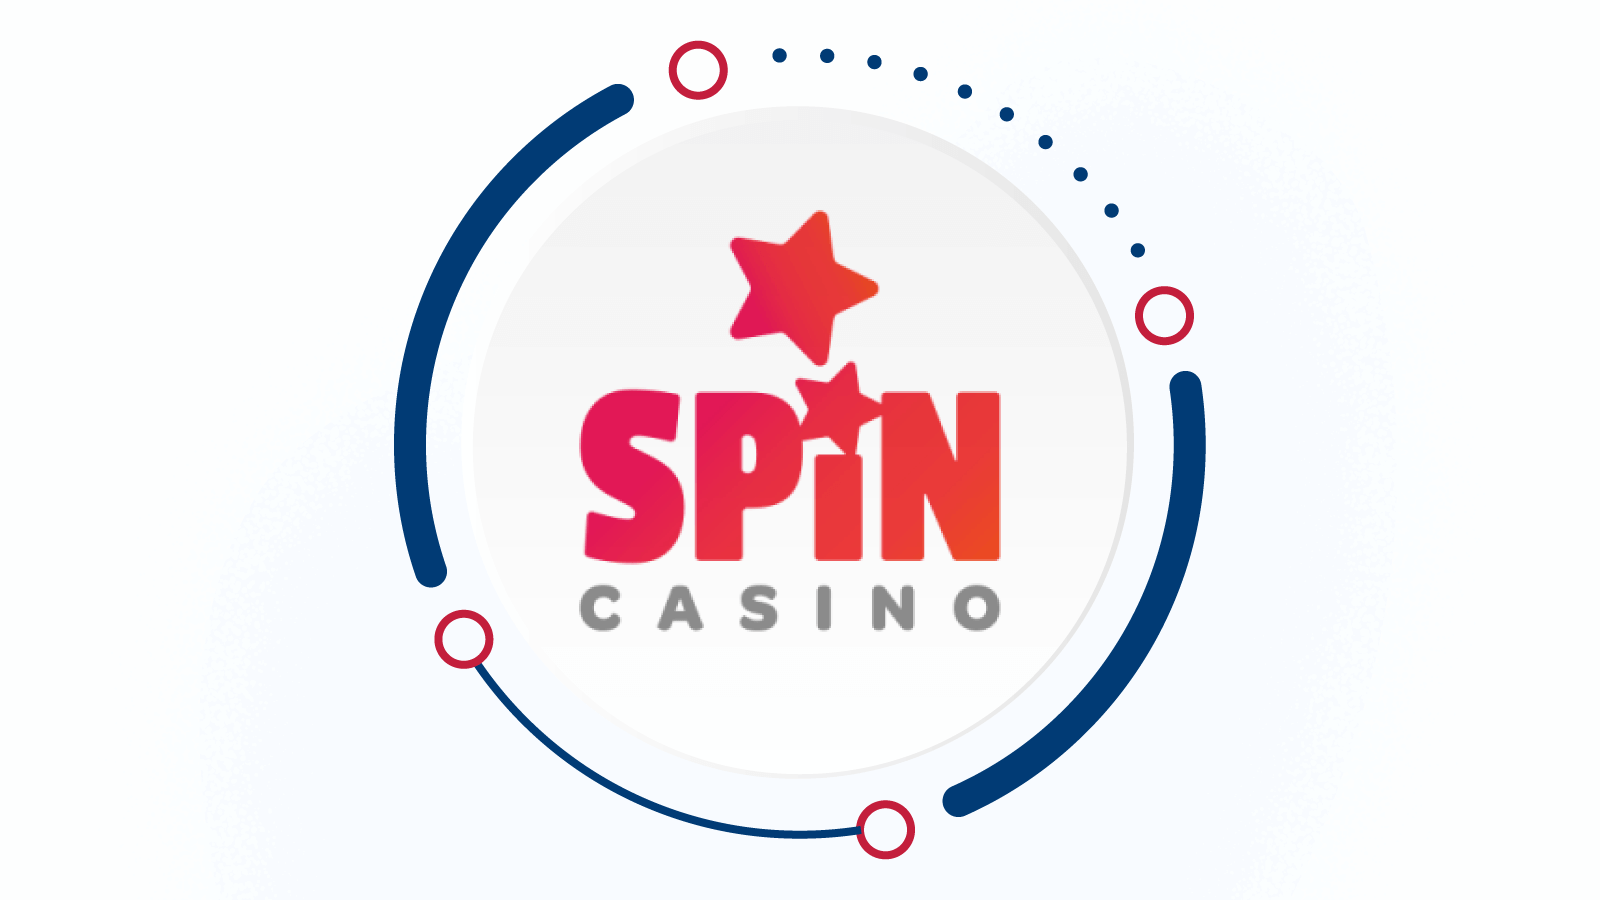 Spin Casino best Interac casino with no minimum deposit